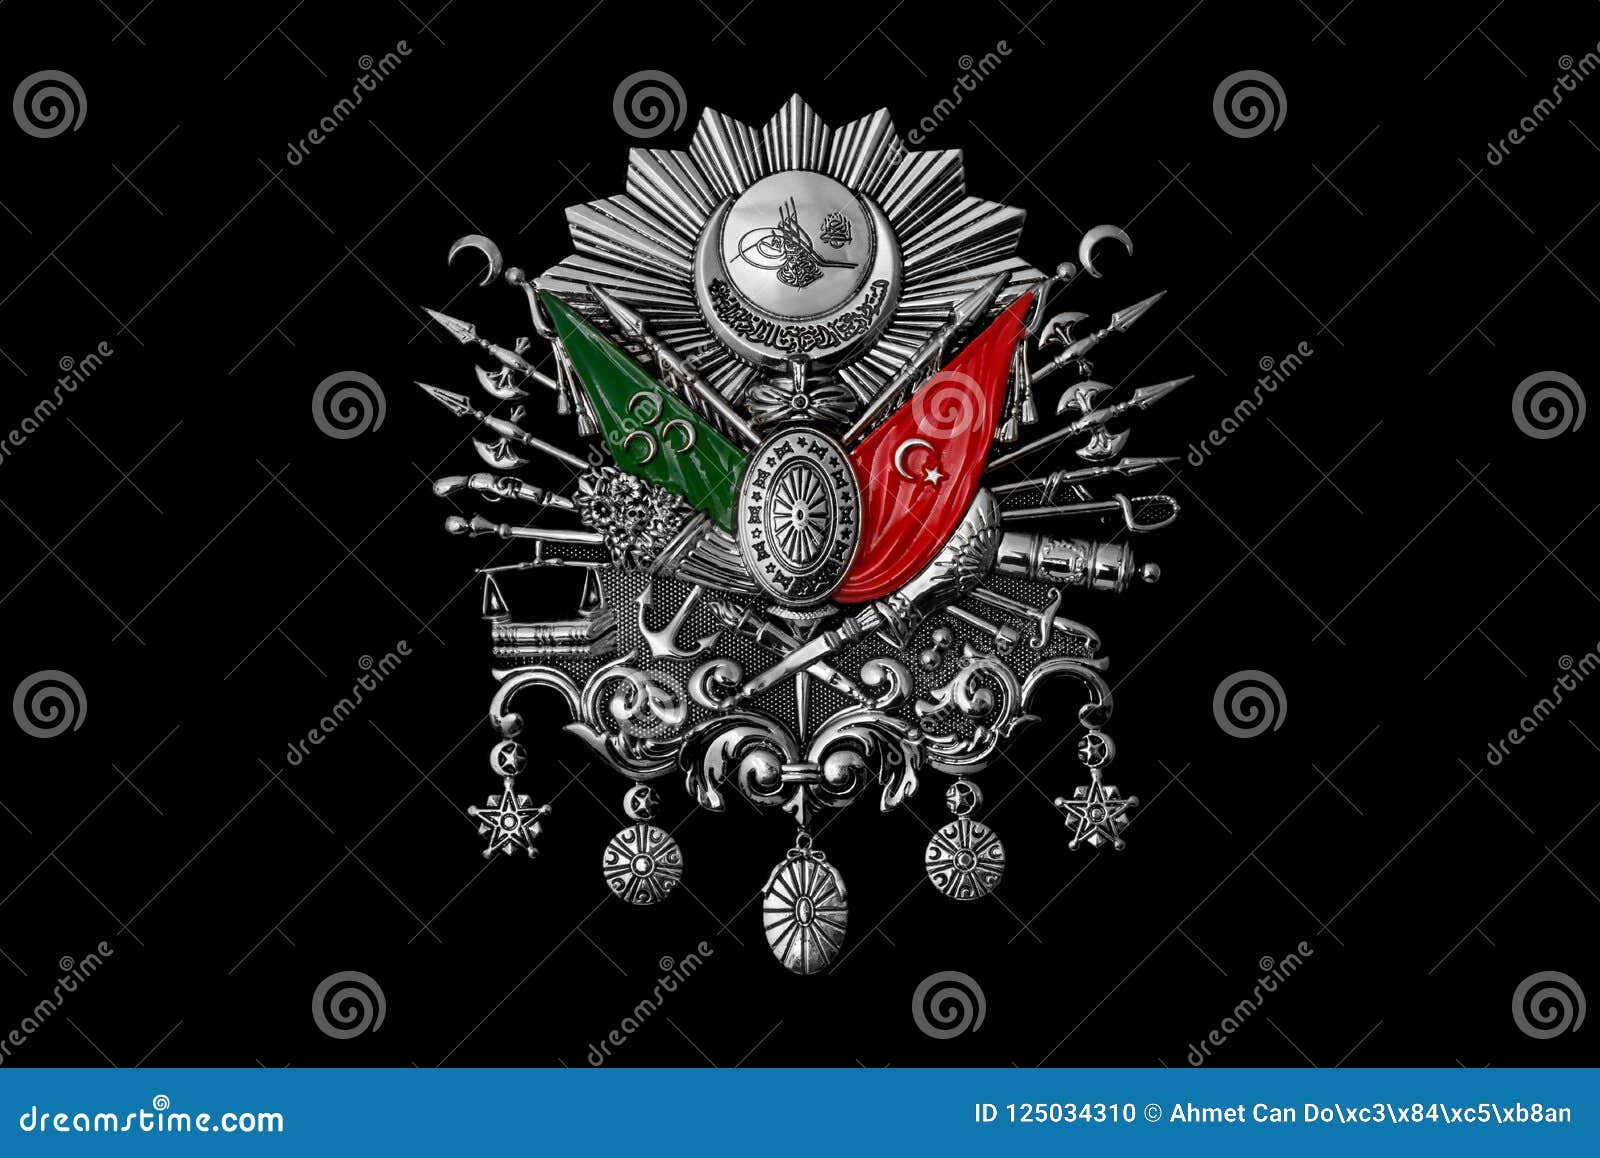 silver emblem of ottoman empire